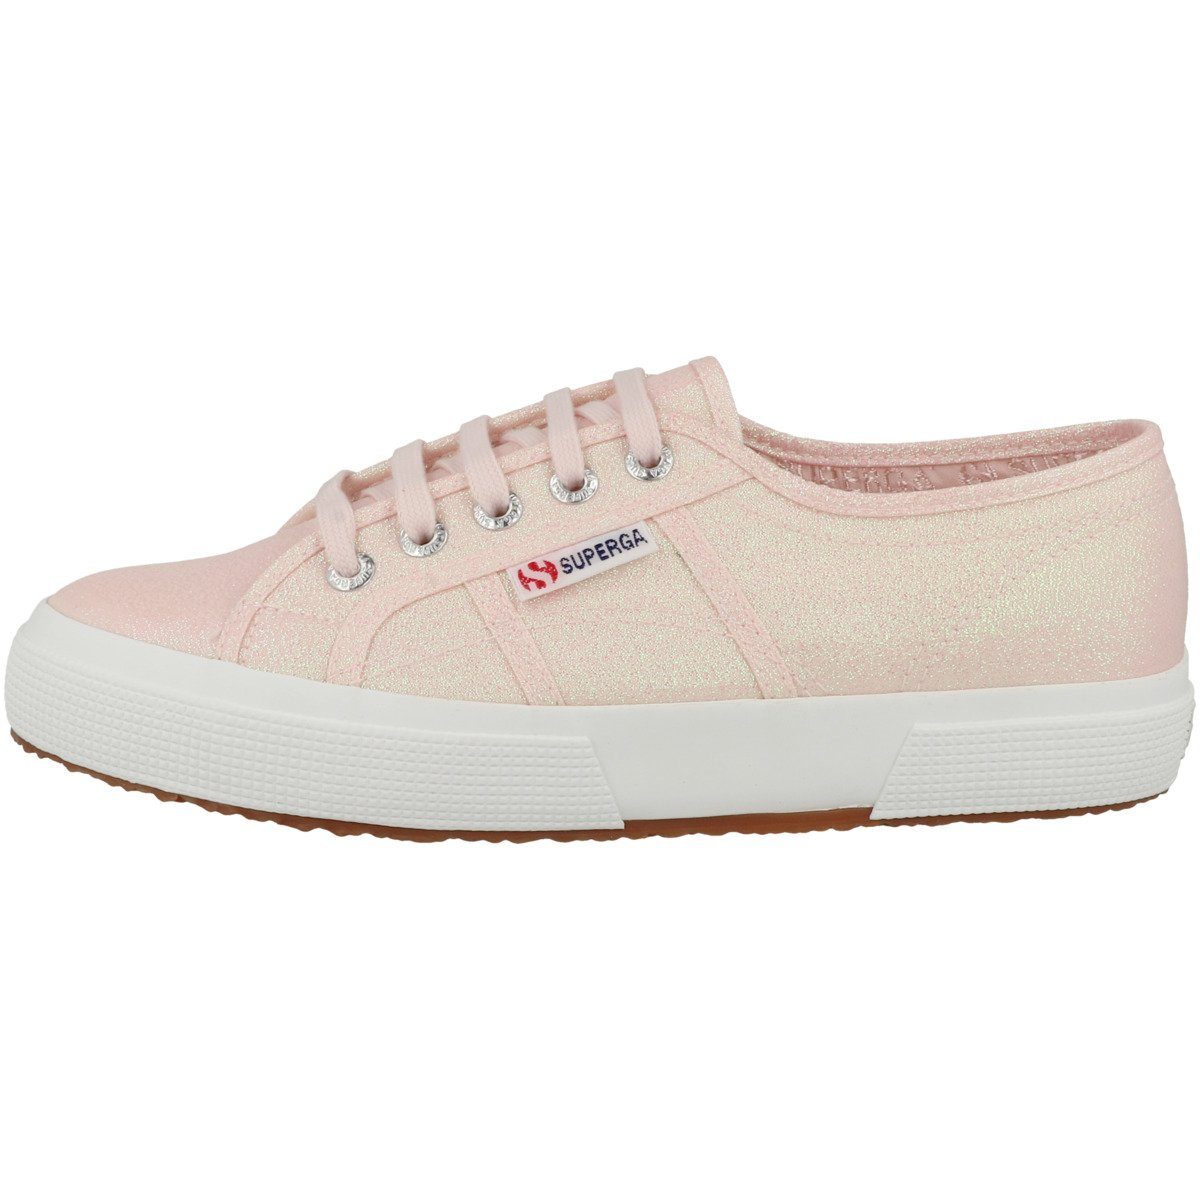 Lamew Superga Damen rosa Sneaker 2750